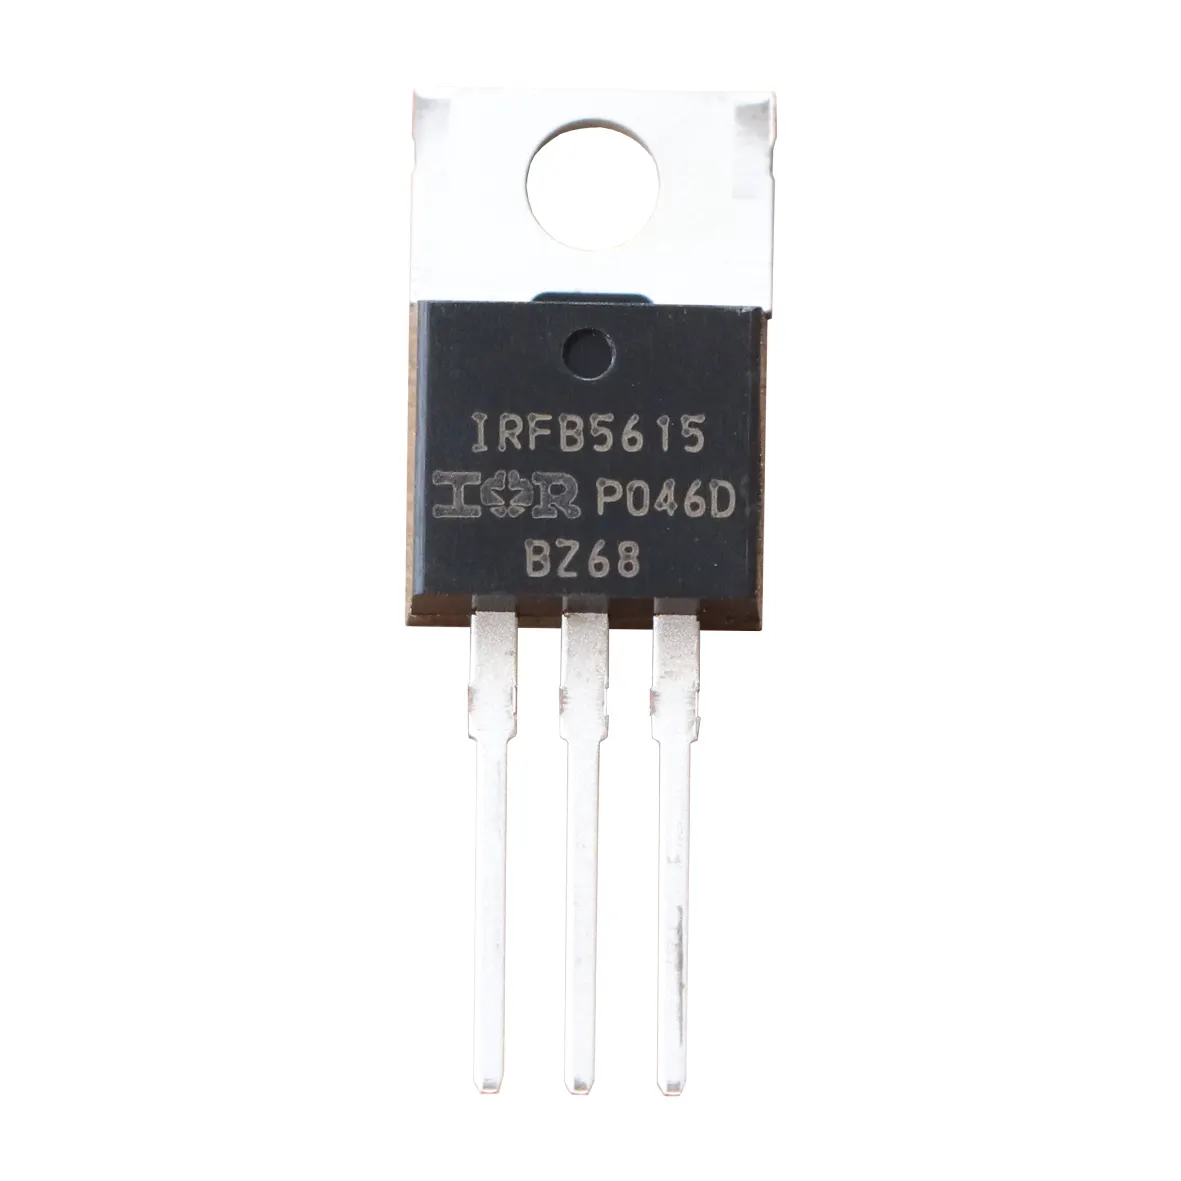 TO-220 nuevo Original Irfb5615pbf circuito integrado IC Chip Transistor 150V 35A IRFB5615PBF